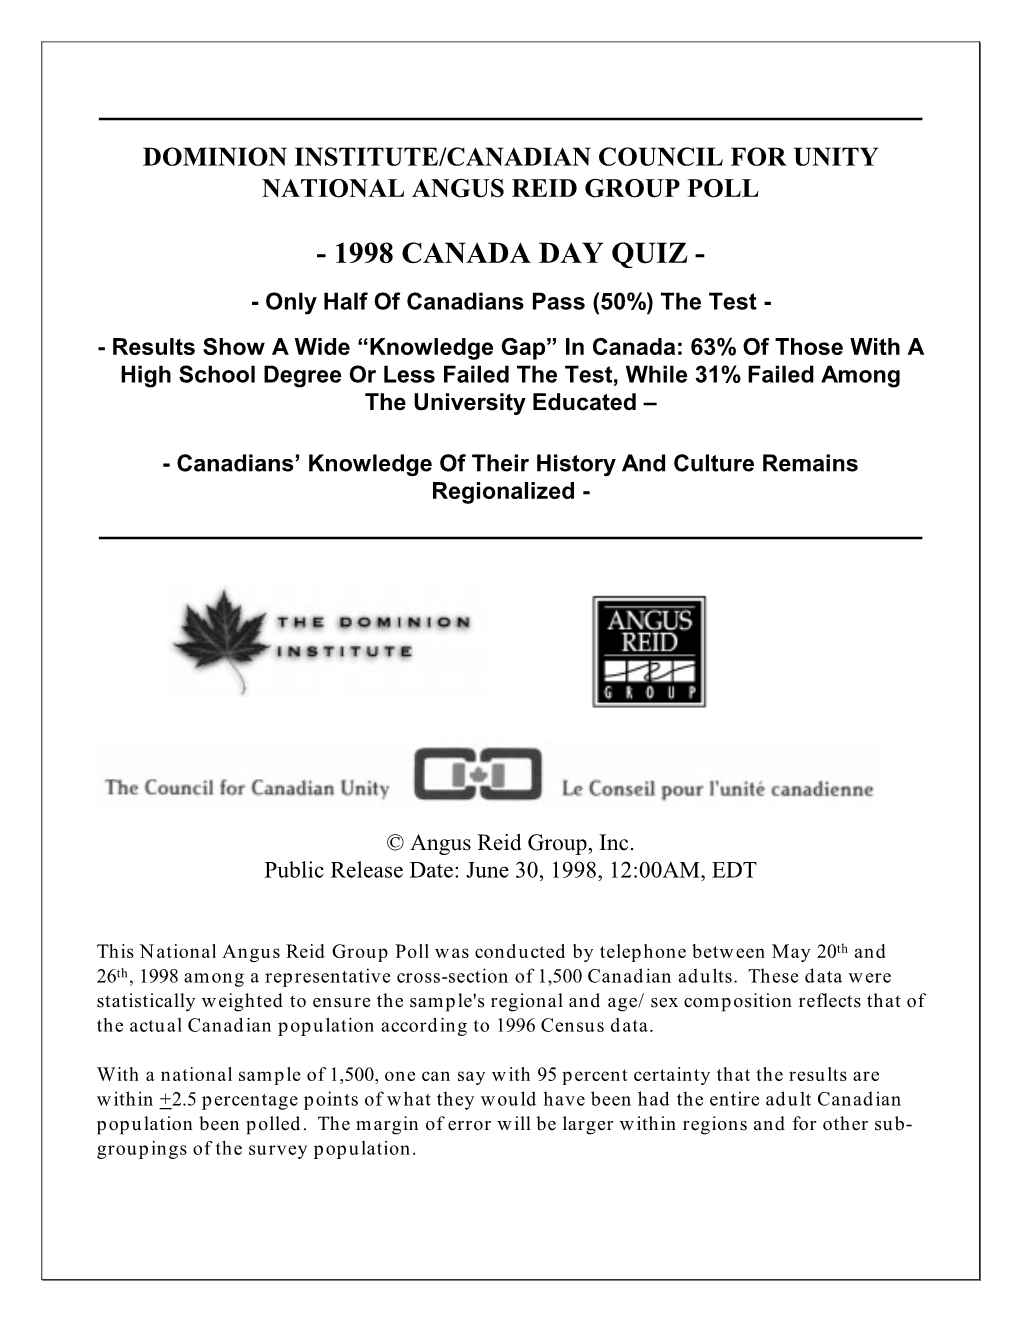 1998 Canada Day Quiz